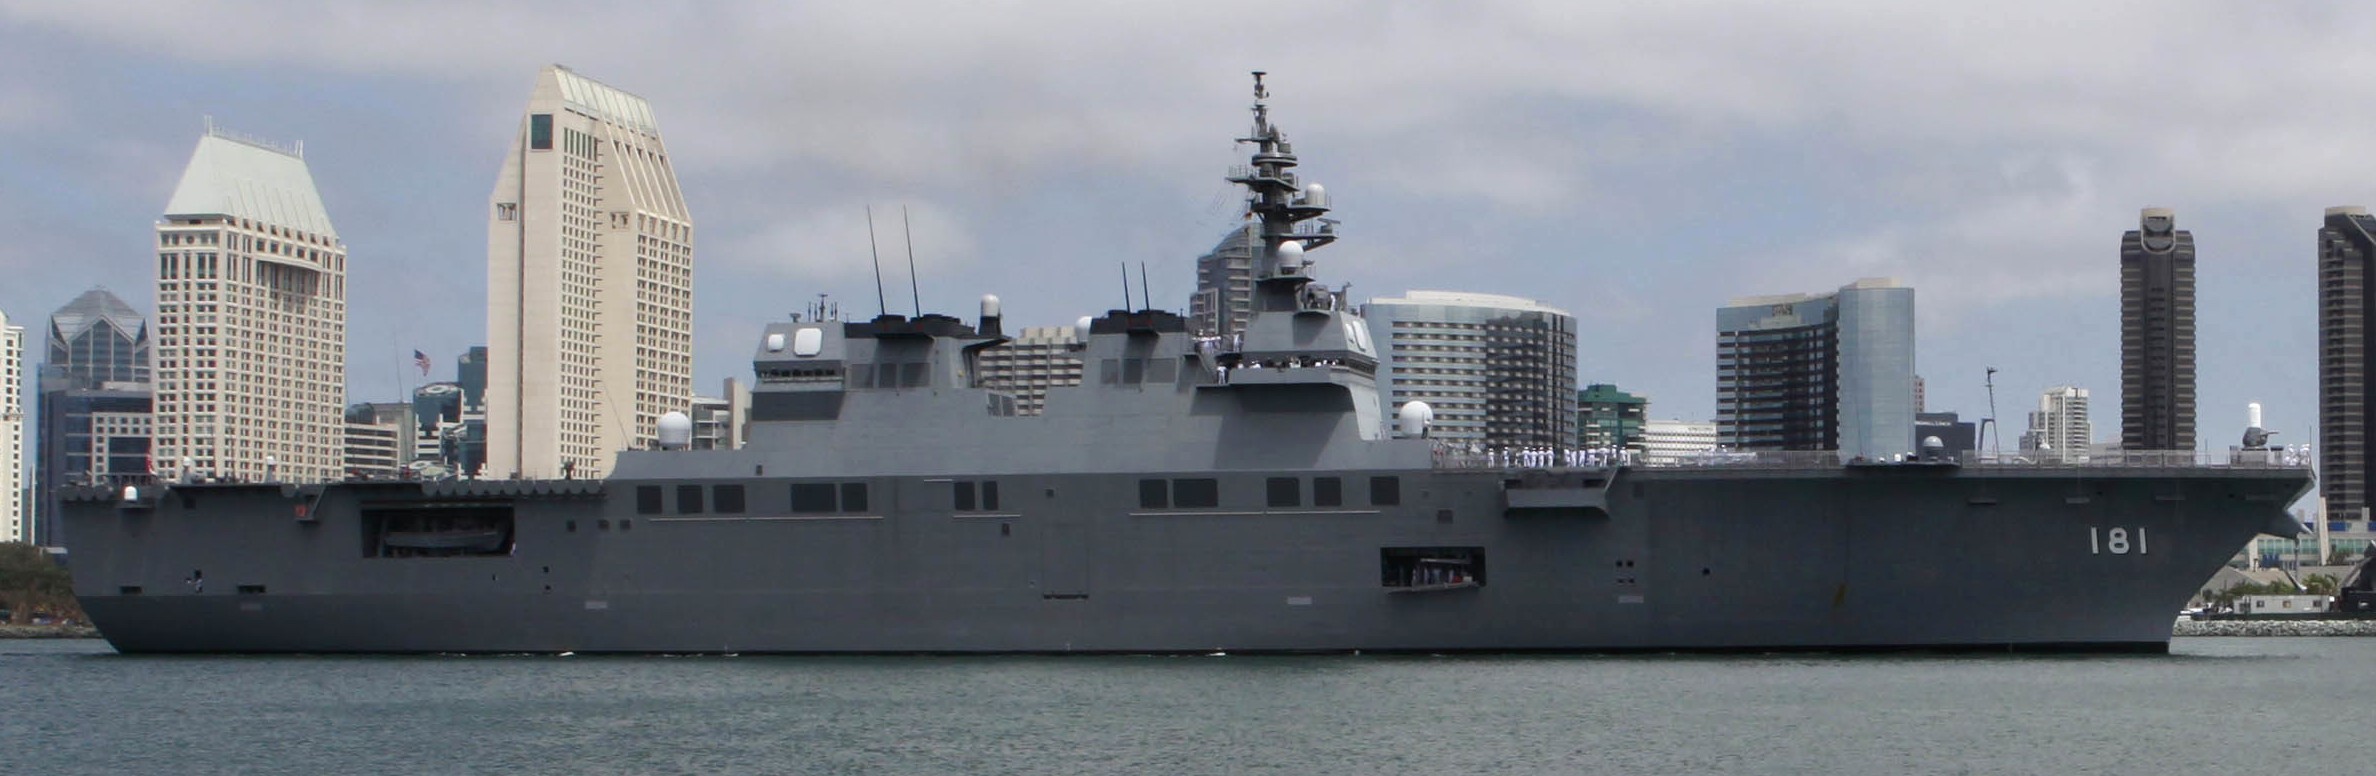 ddh-181 js hyuga helicopter destroyer japan maritime self defense force jmsdf 46 san diego